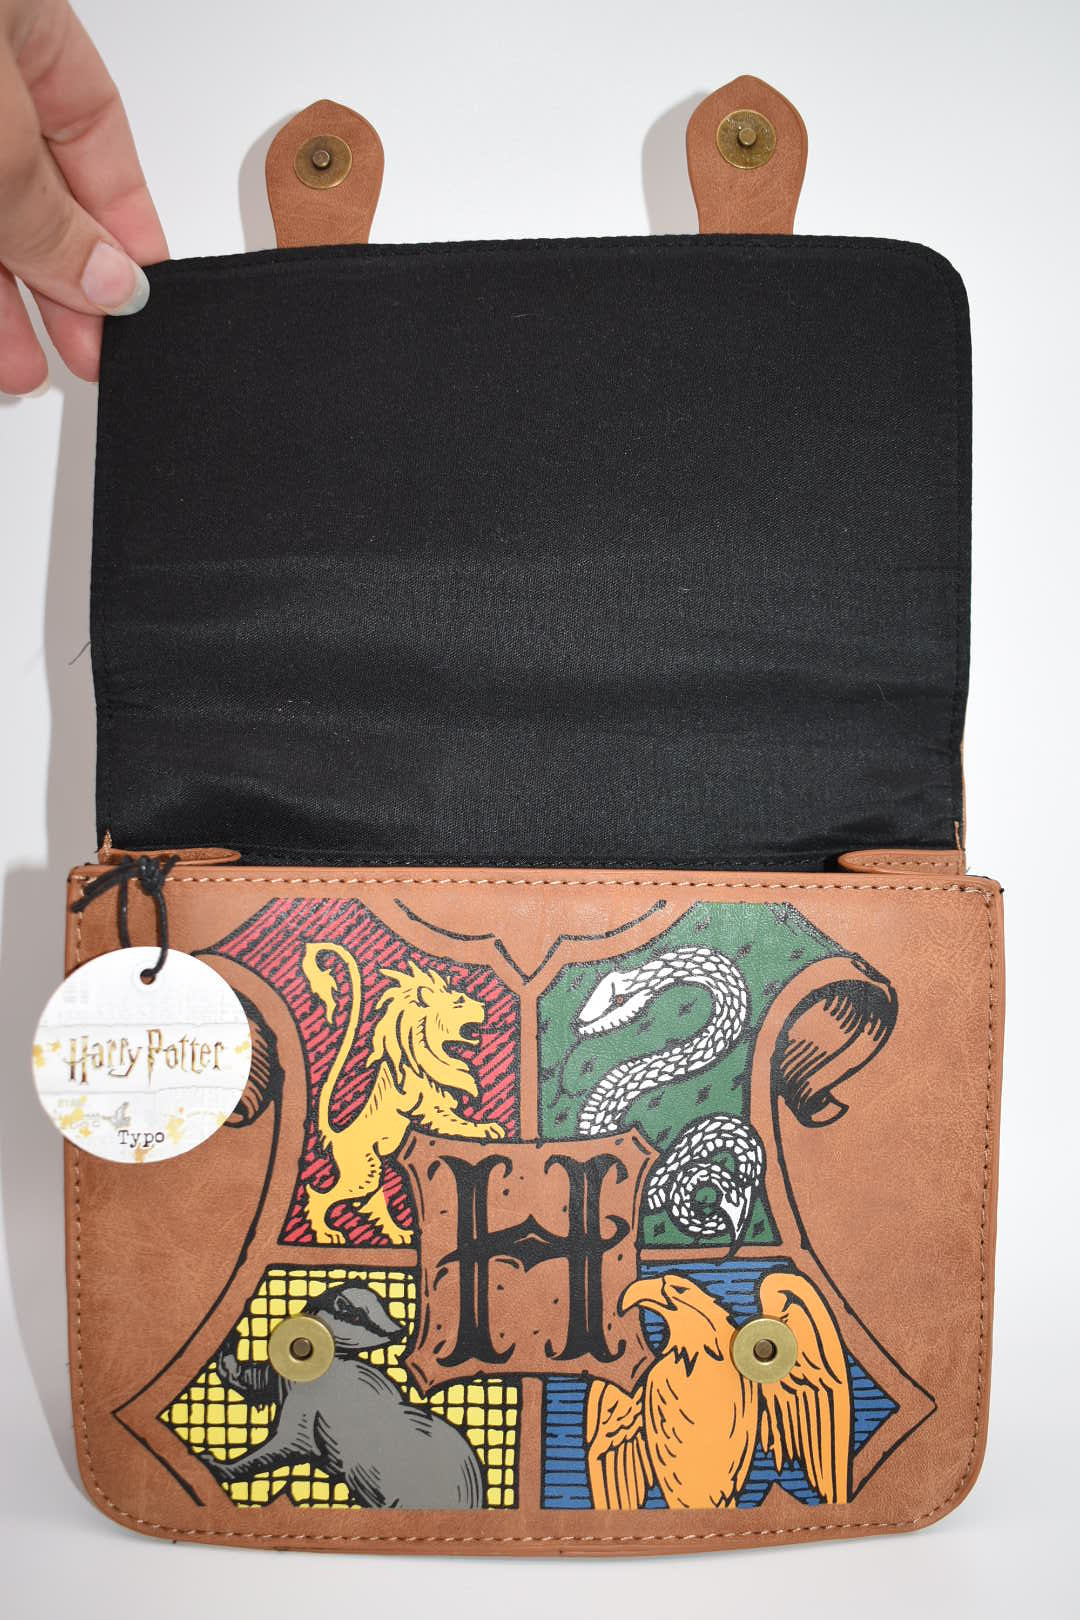 Harry Potter Mini Buffalo Saddle Bag by Typo